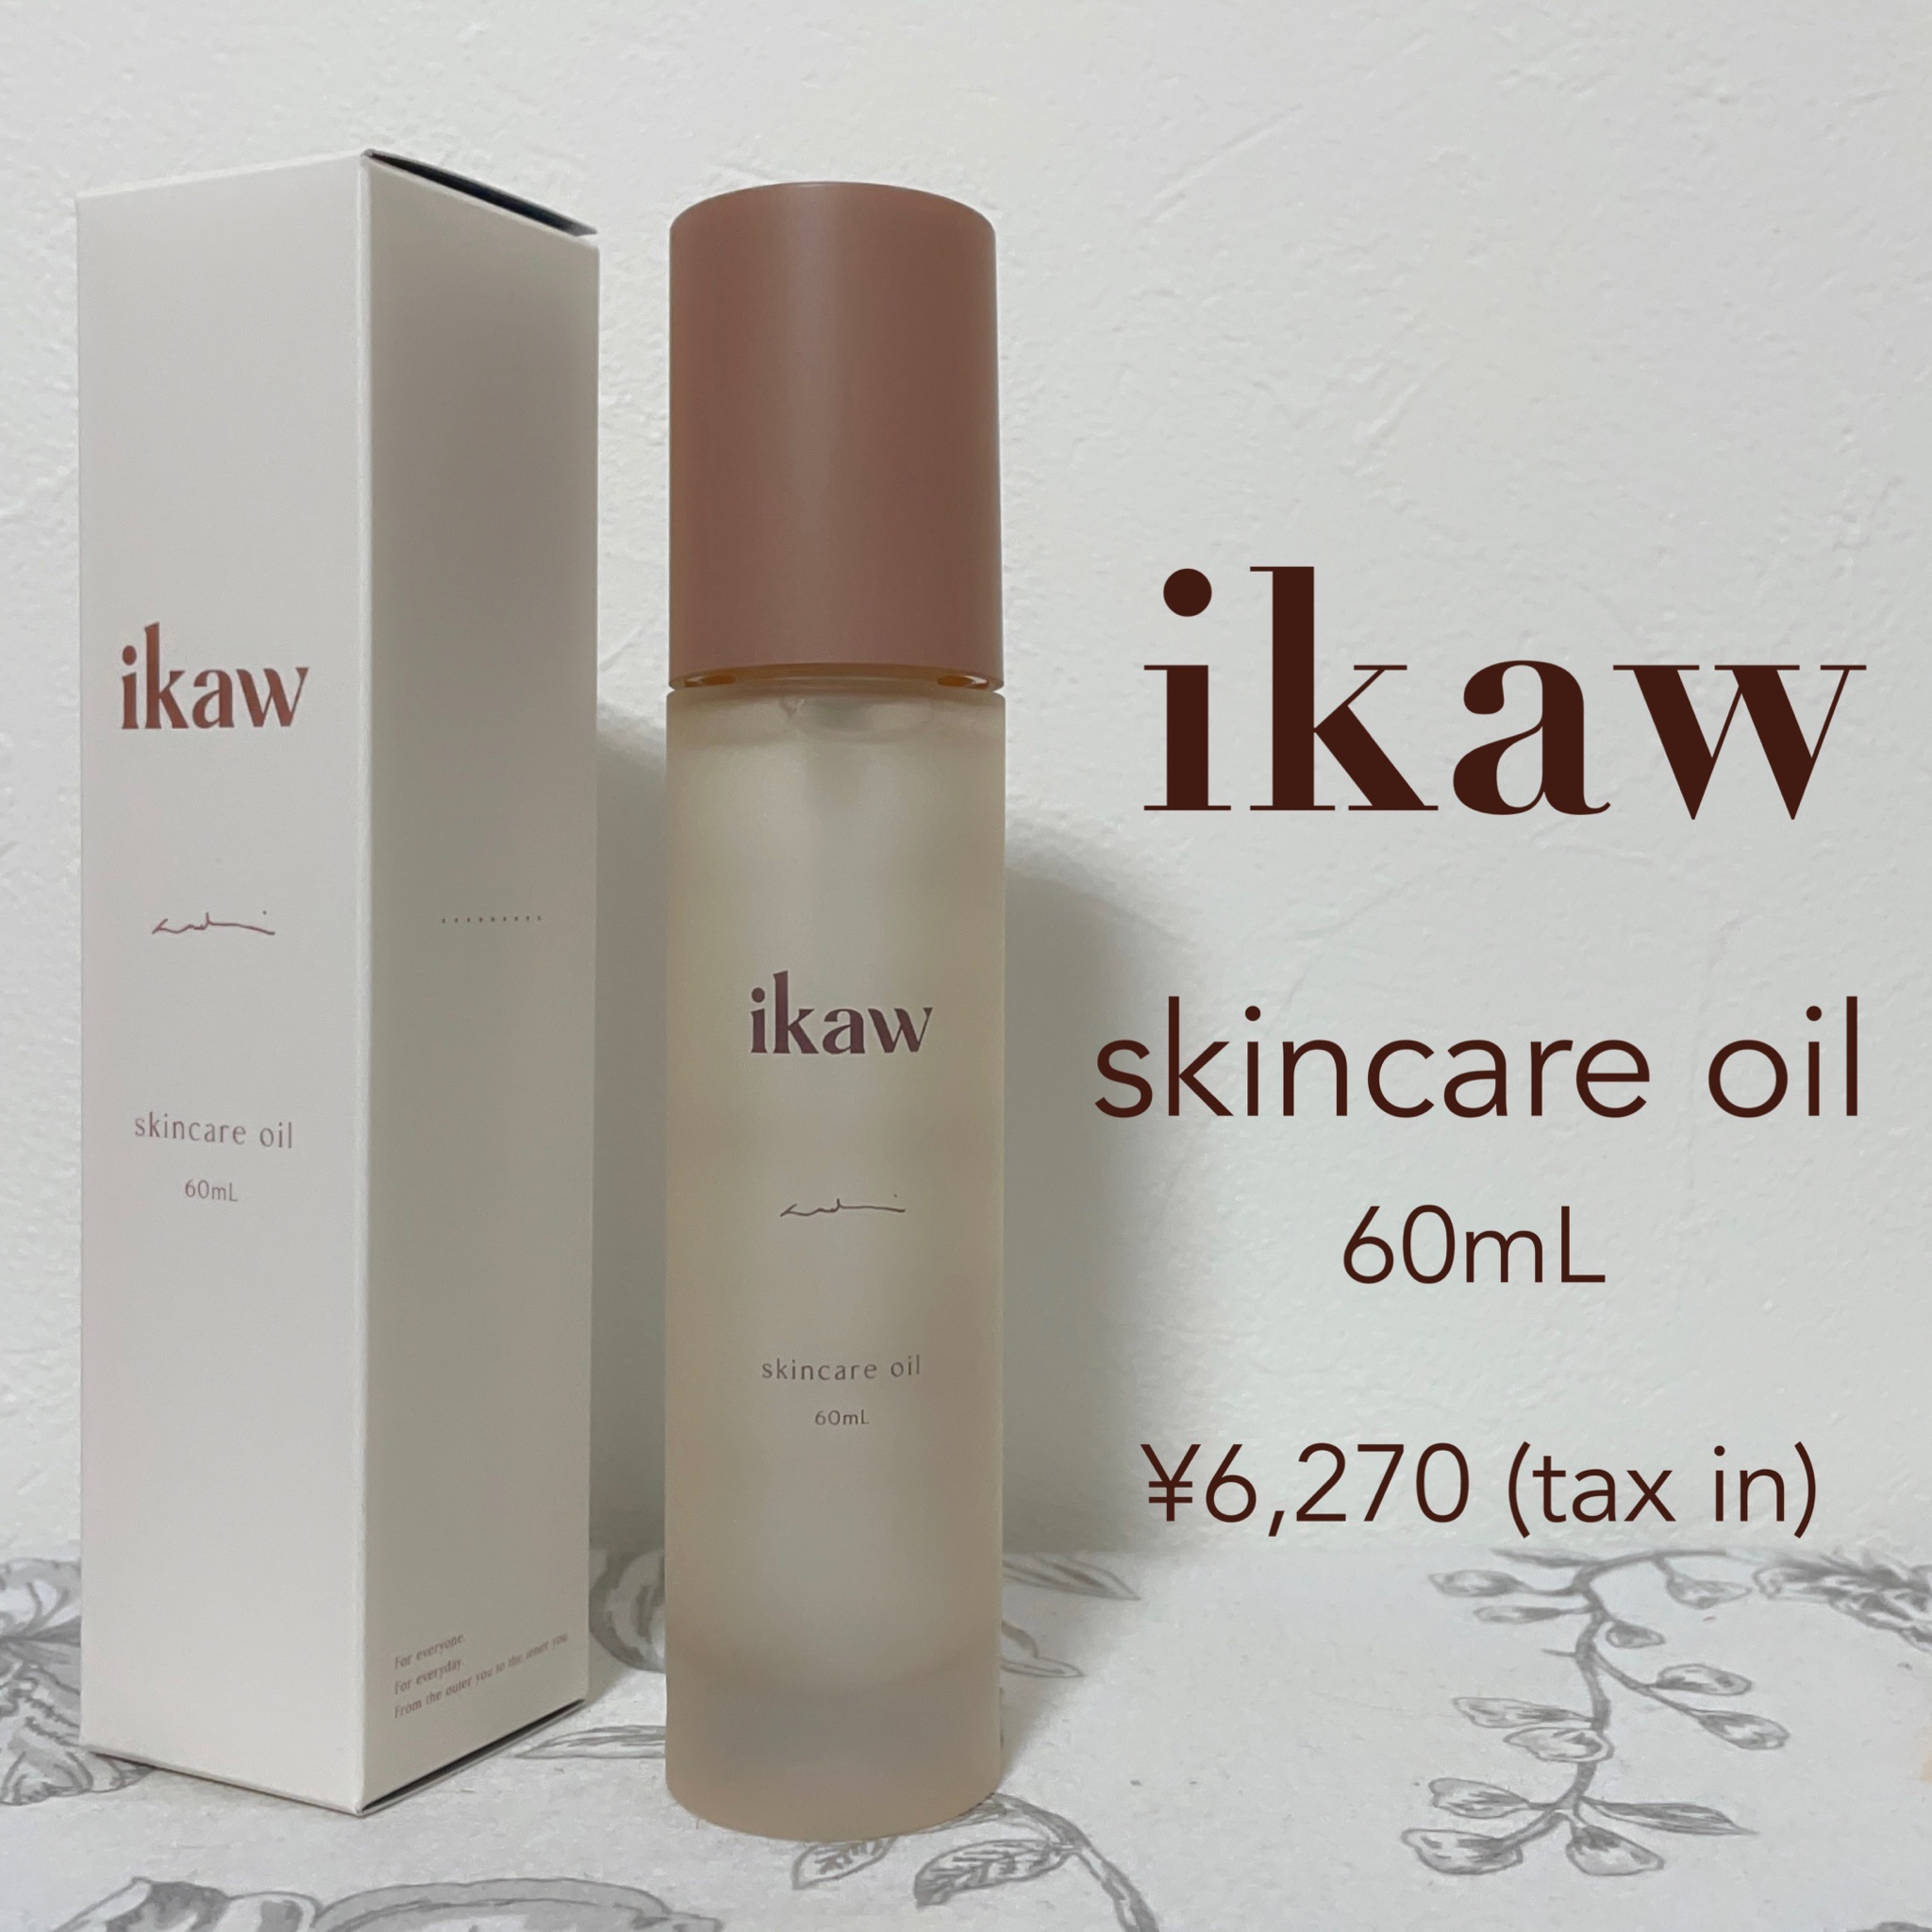 ikaw skincare oil 60ml - freecold.com